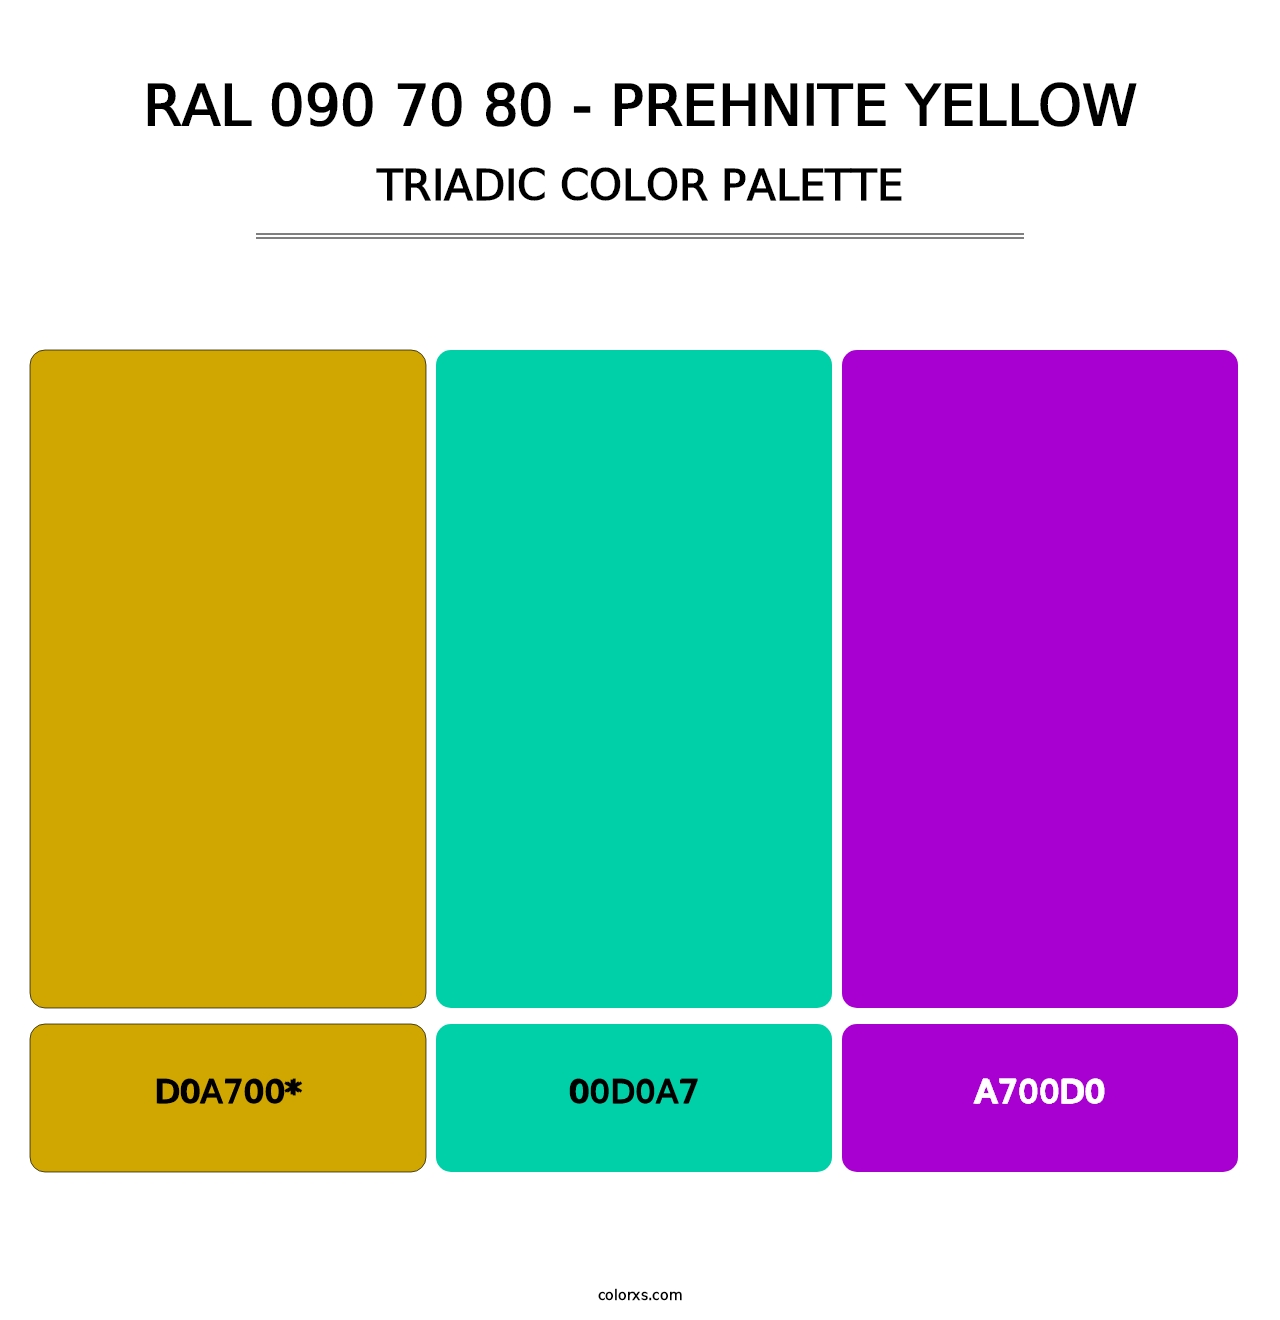 RAL 090 70 80 - Prehnite Yellow - Triadic Color Palette